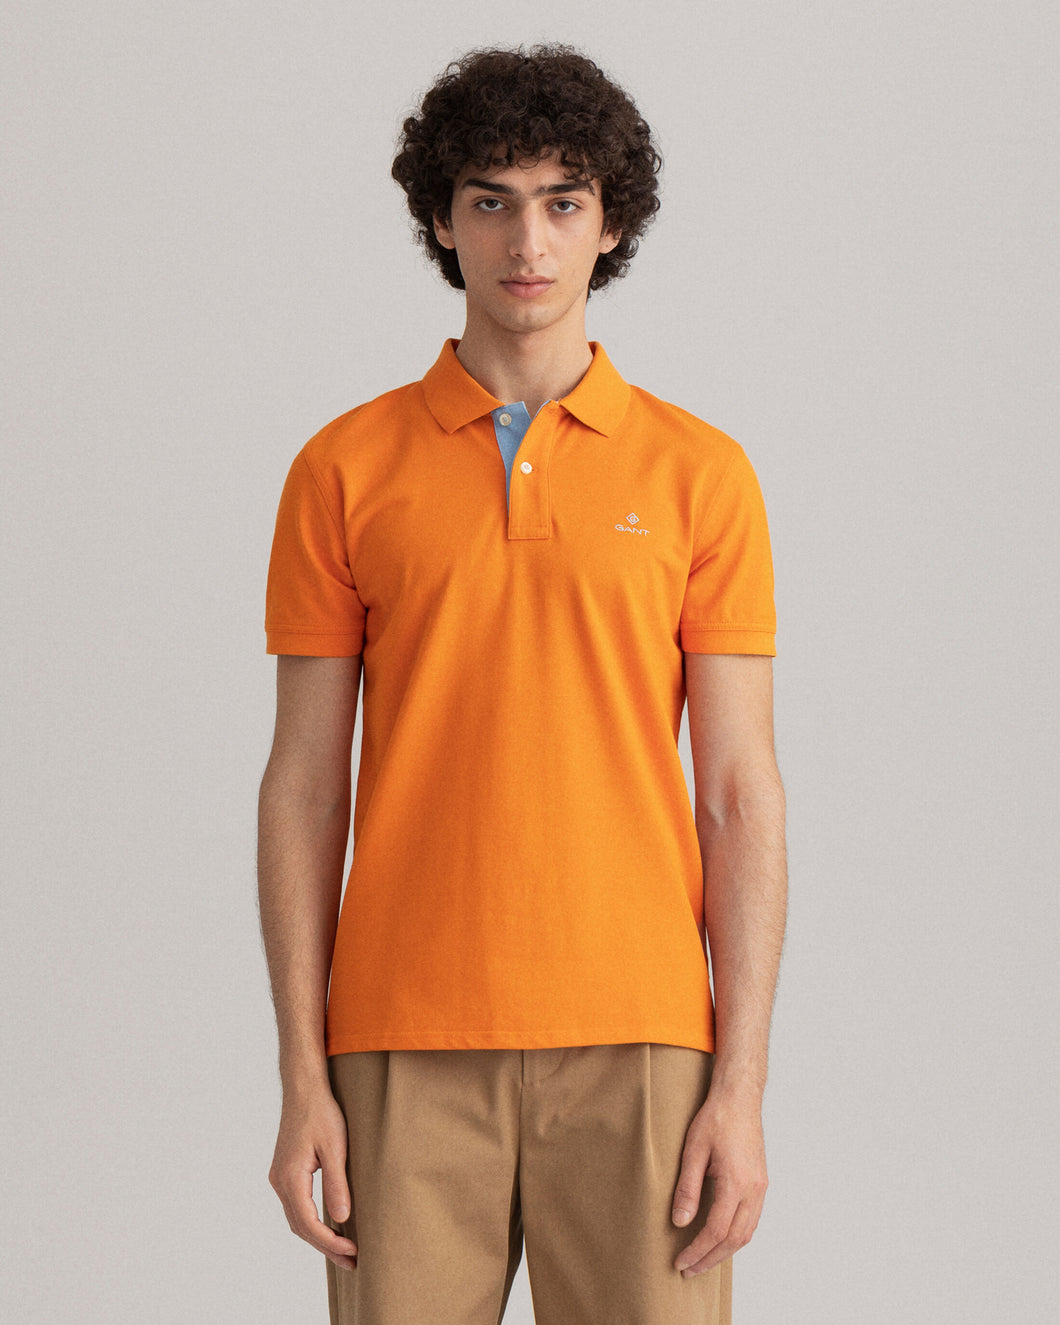 GANT - Contrast Collar Pique Polo, Russet Orange (L & XL Only)